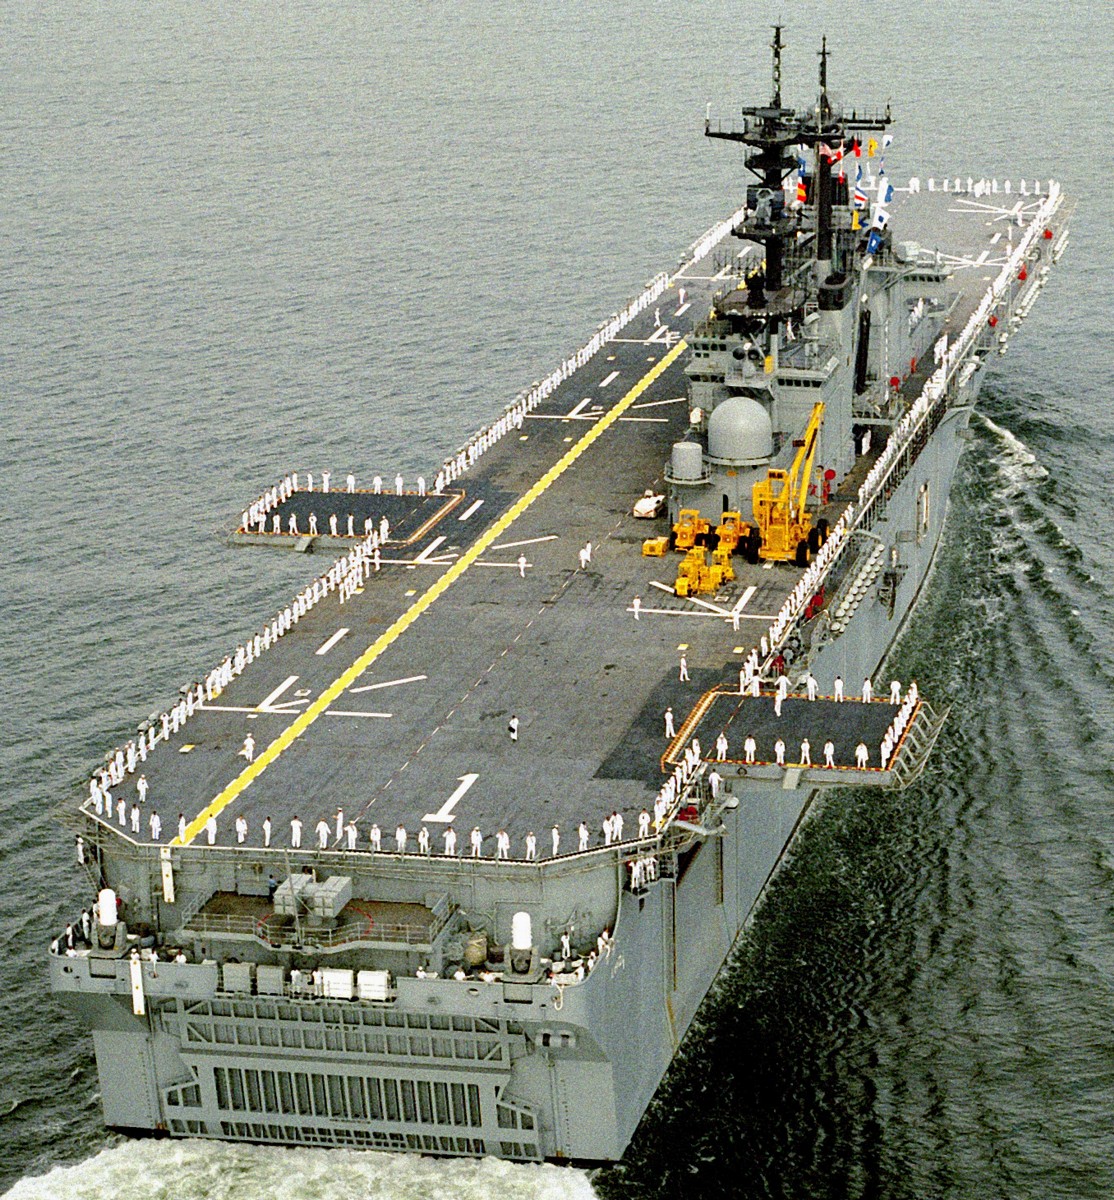 lhd-1 uss wasp amphibious assault landing ship dock helicopter us navy 58